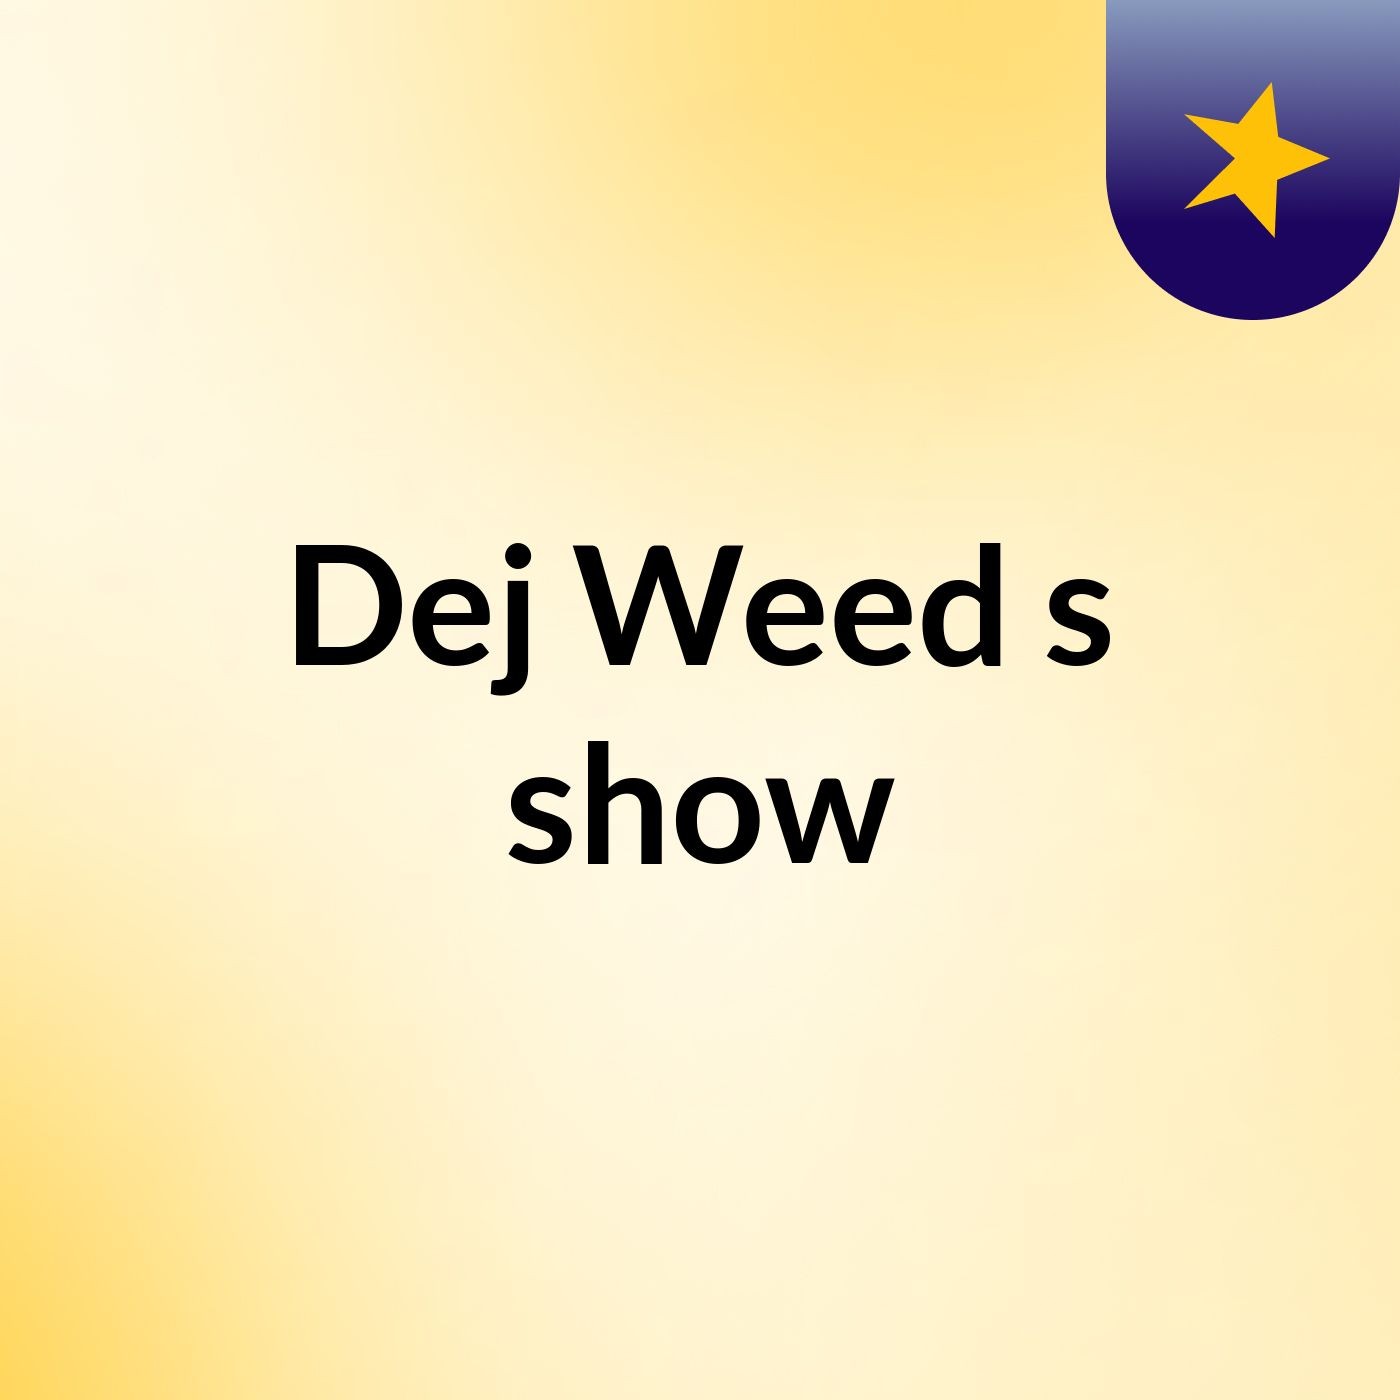 Dej Weed's show